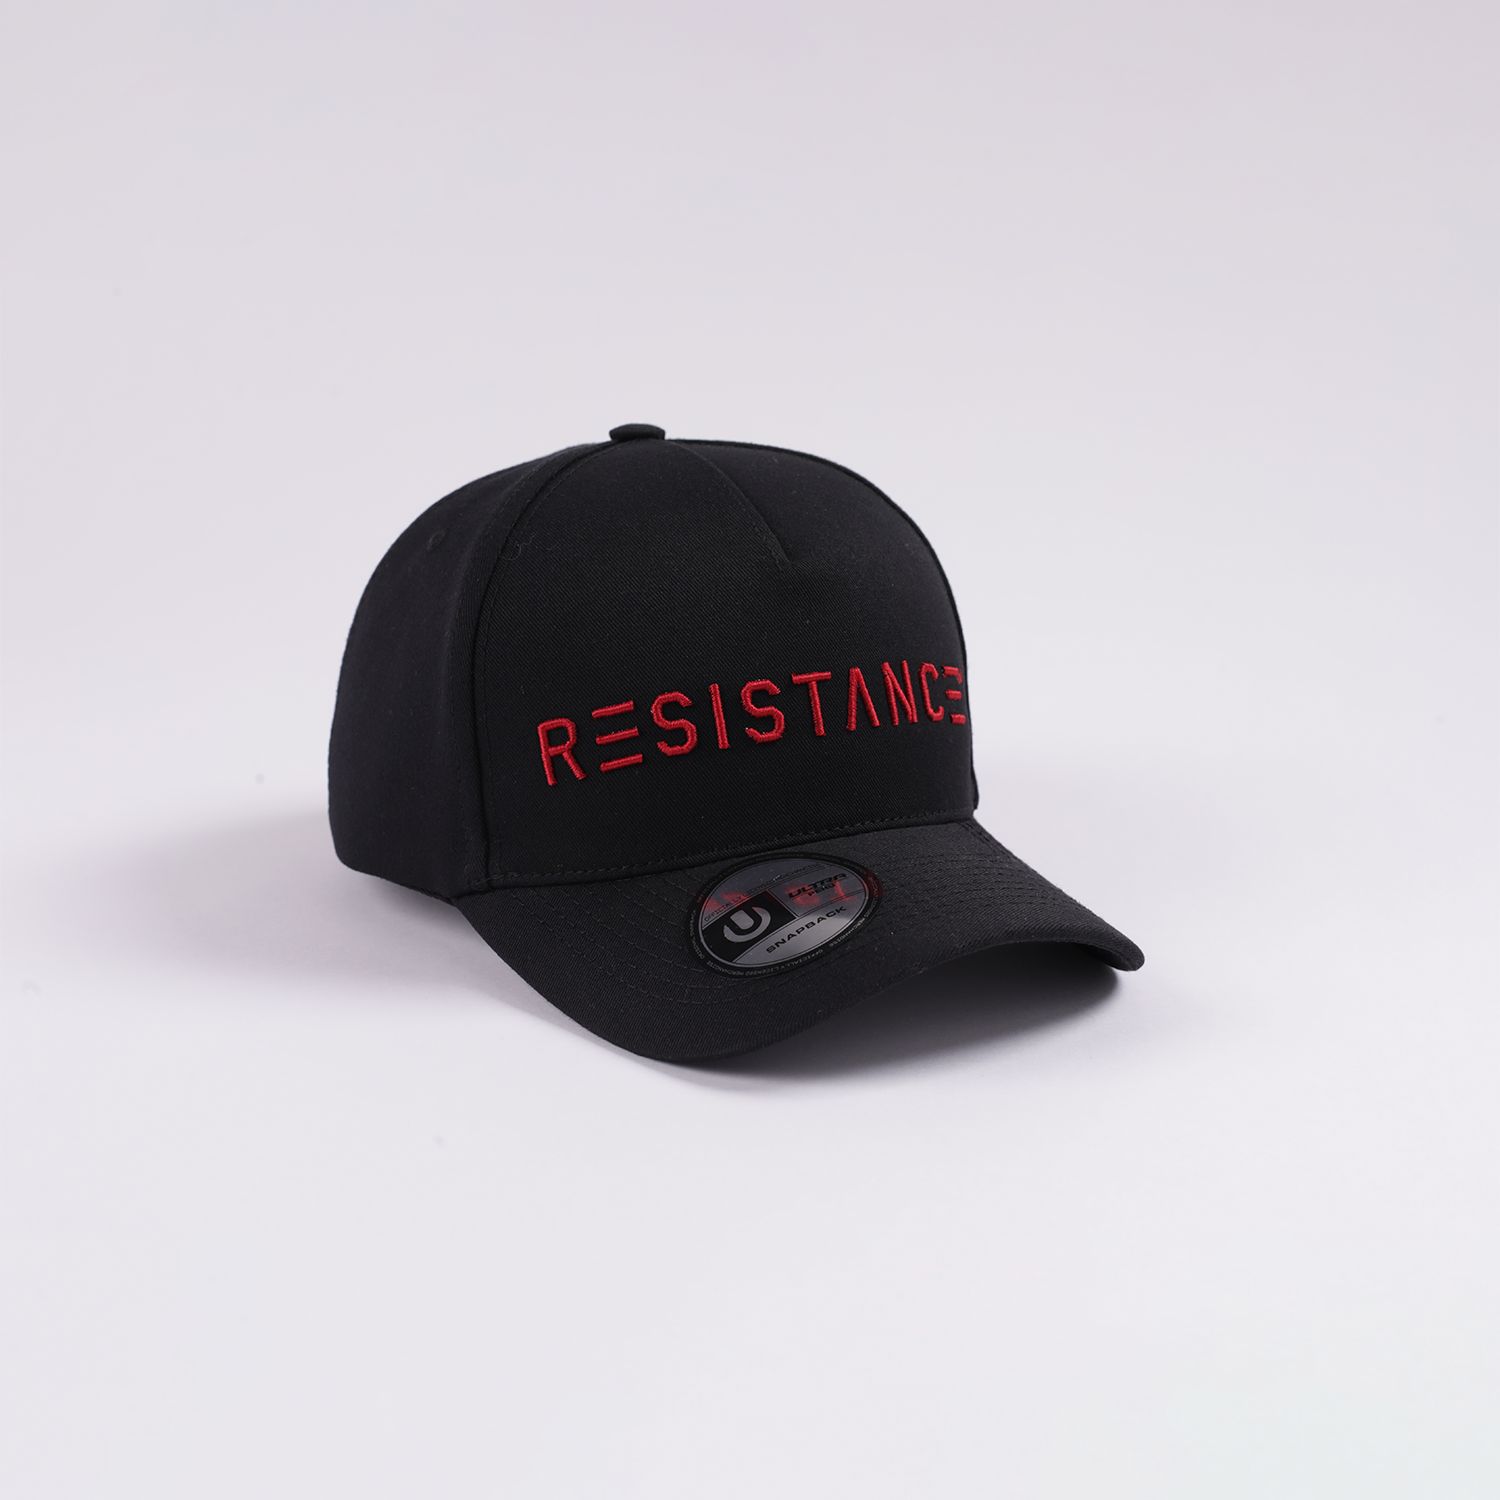 Gorra Resistance oficial